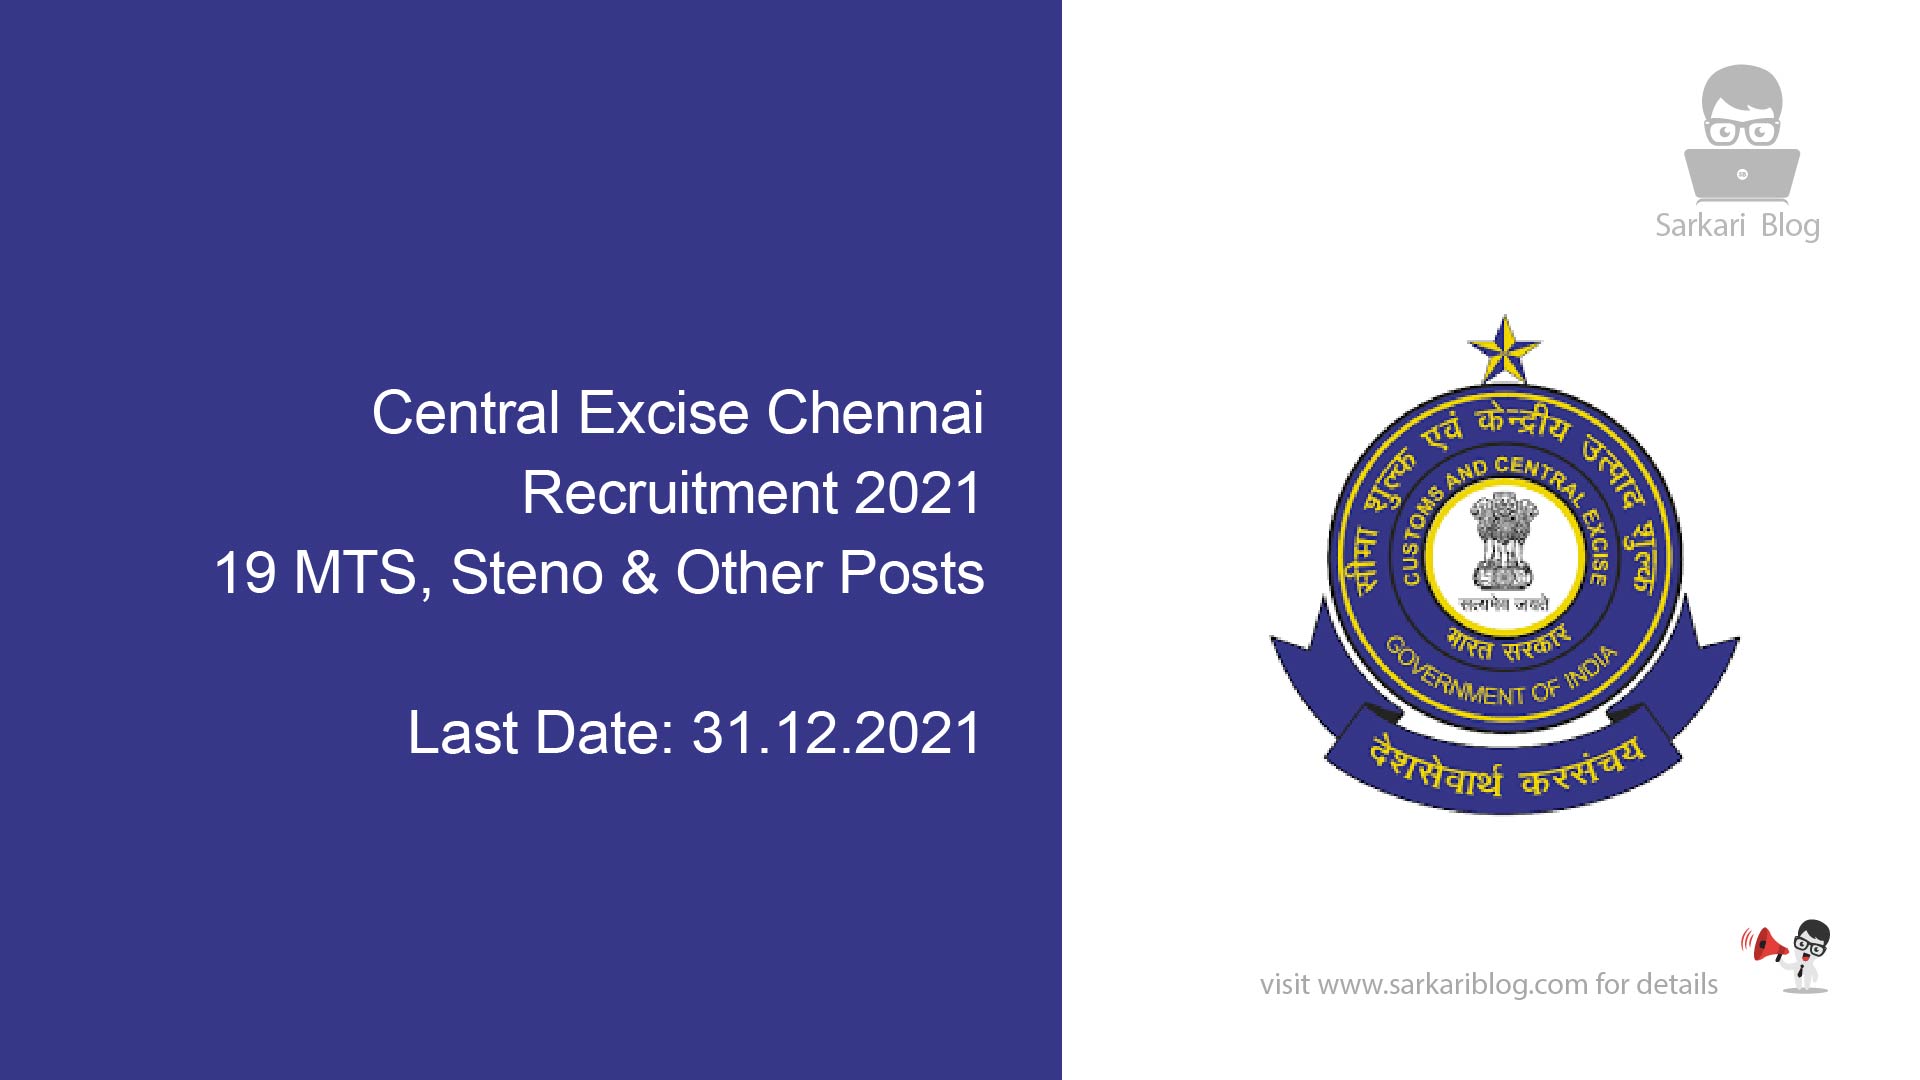 Central Excise Chennai Recruitment 2021